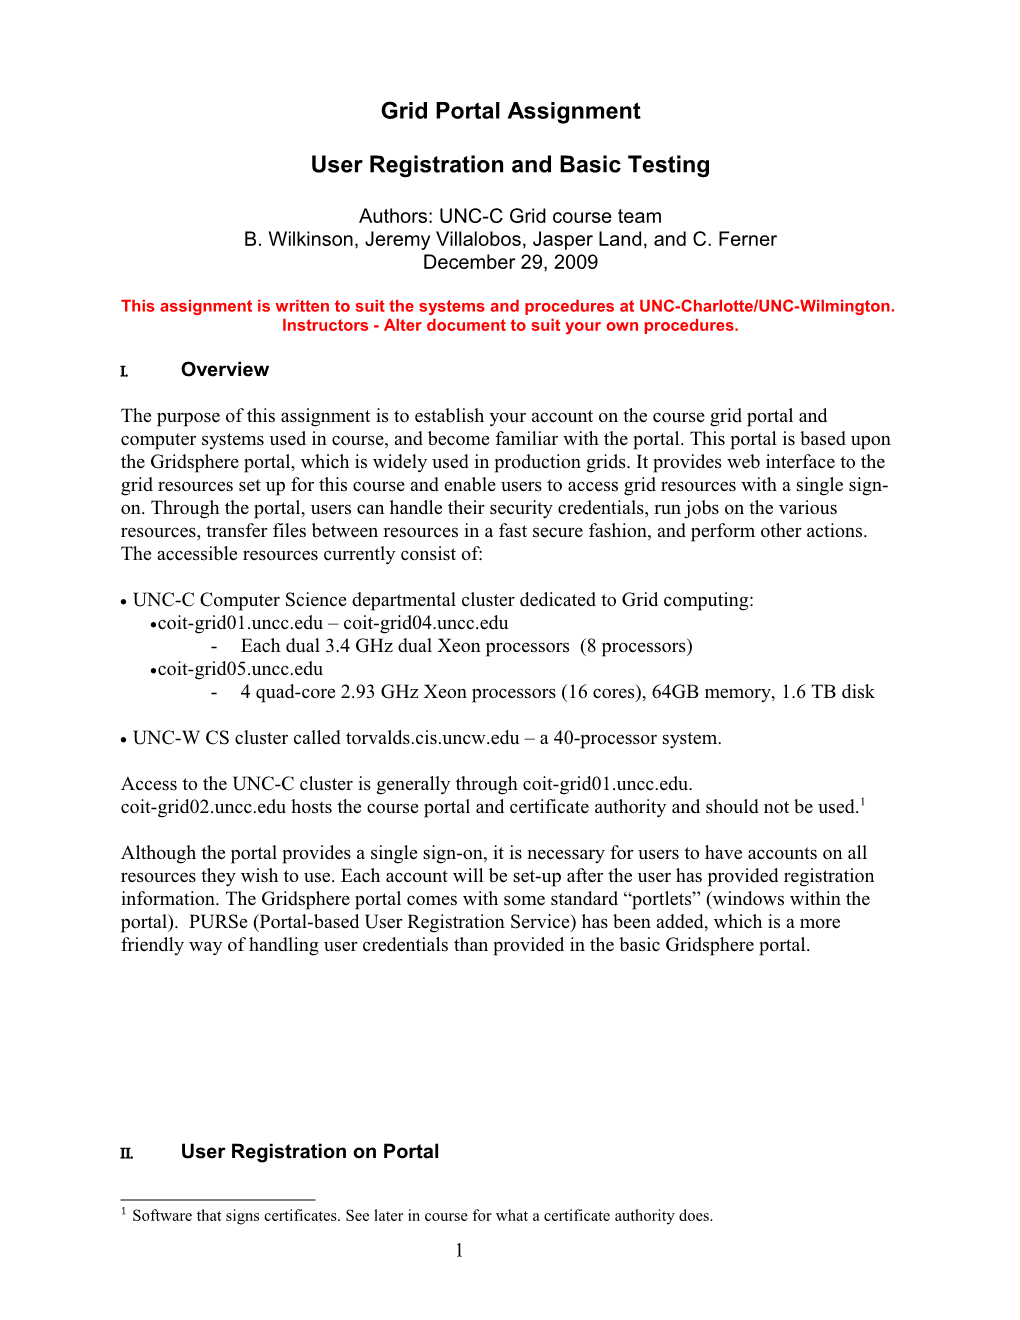 User Registration and Basic Testing